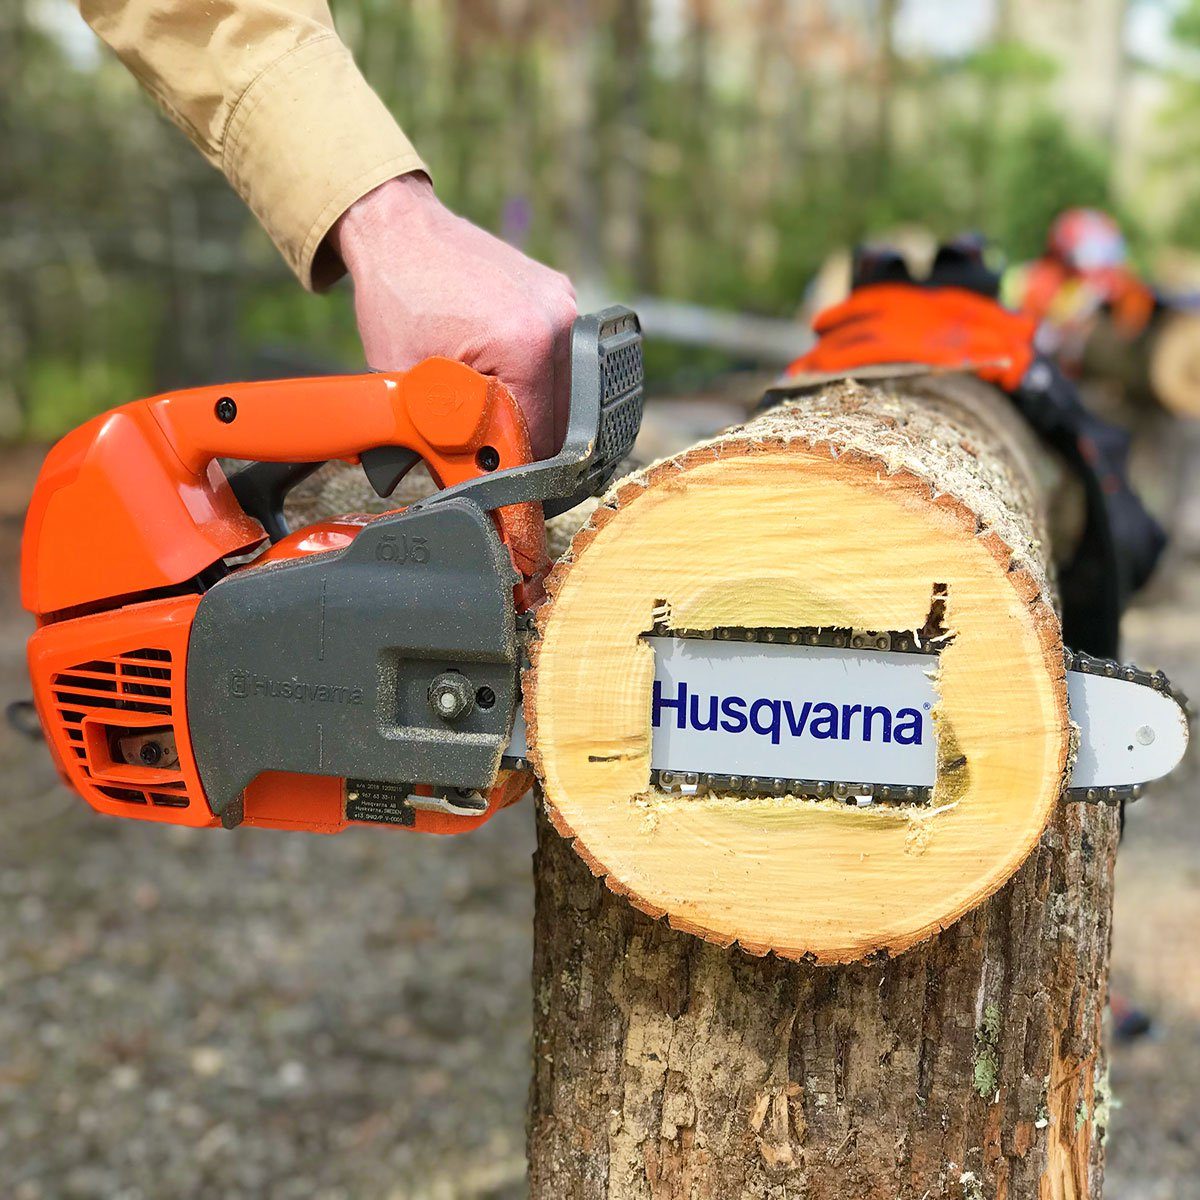 New Husqvarna Chain Saws Unveiled